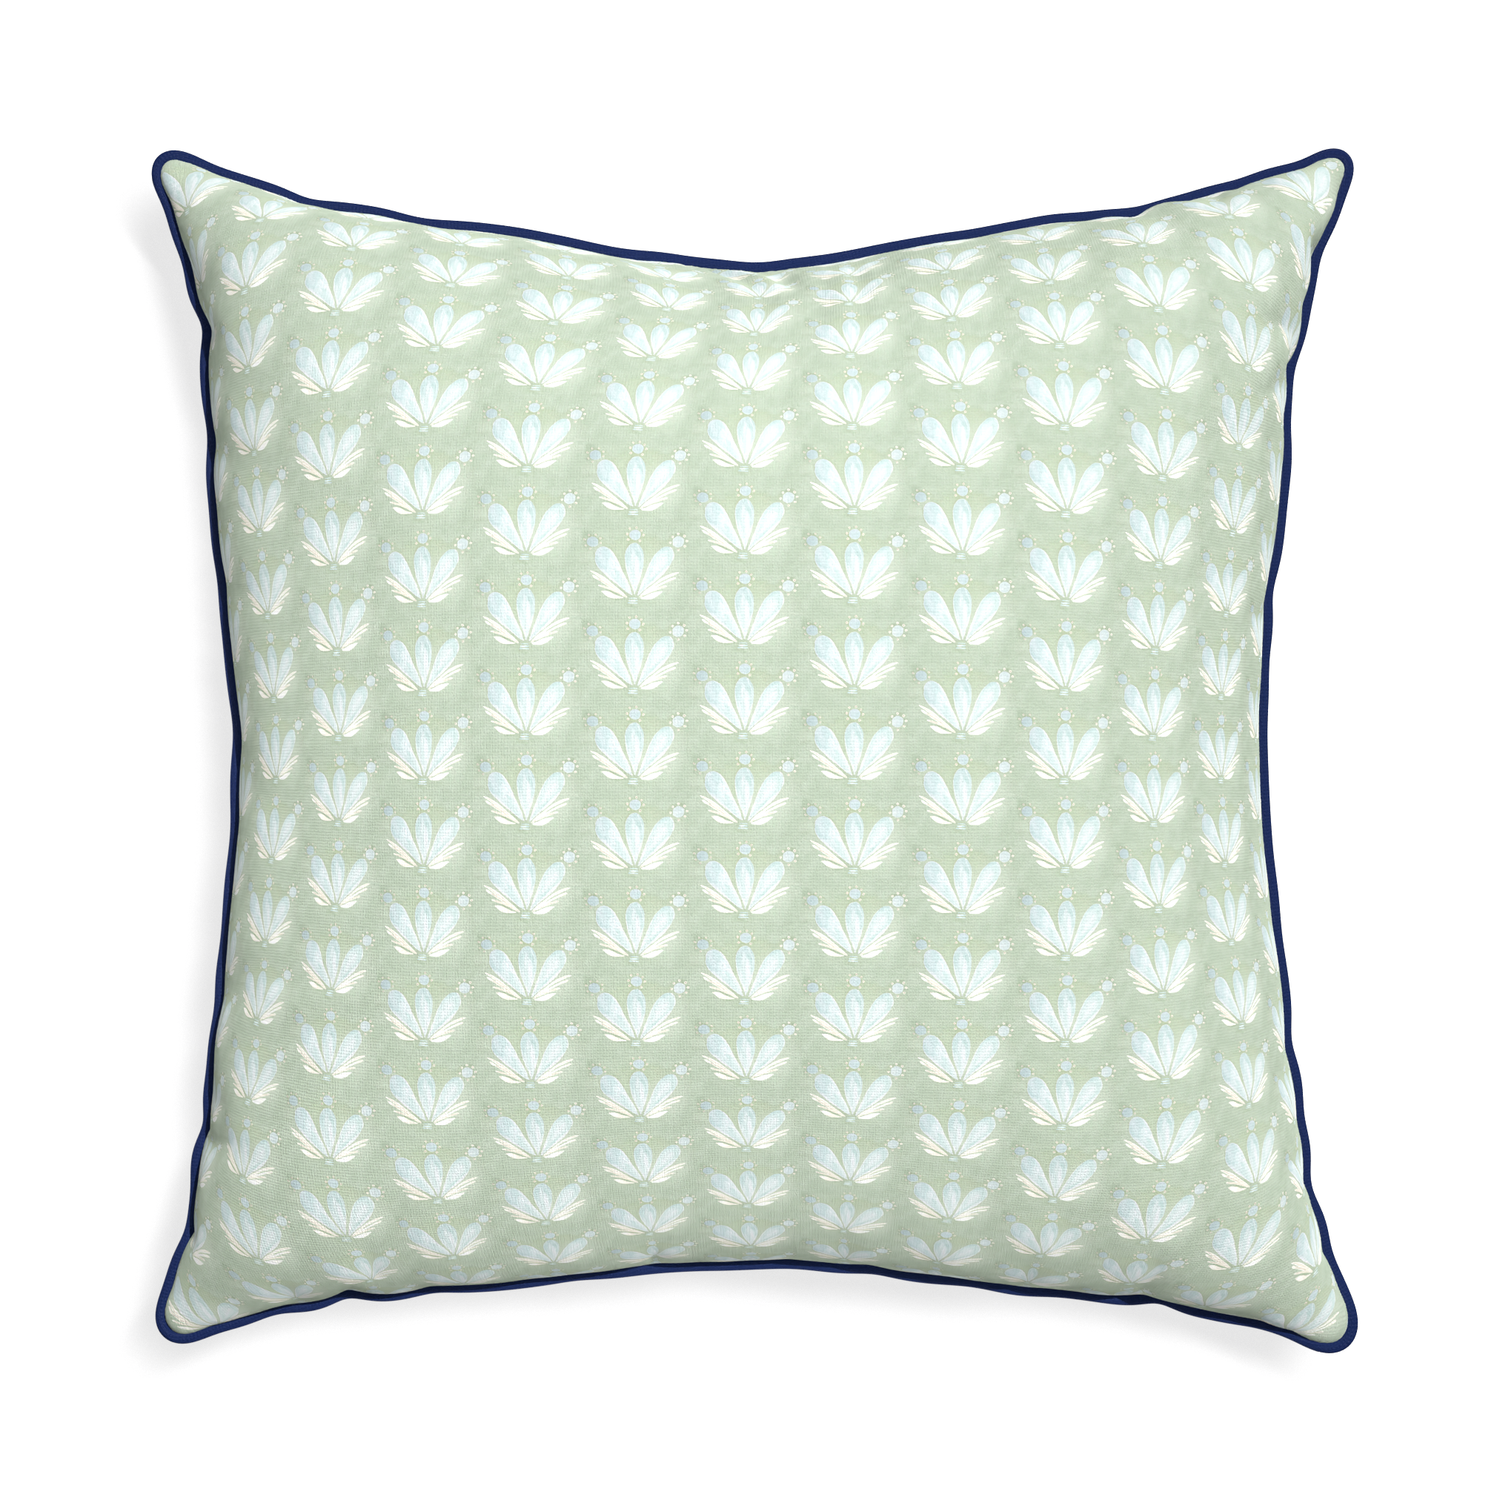 Euro-sham serena sea salt custom pillow with midnight piping on white background